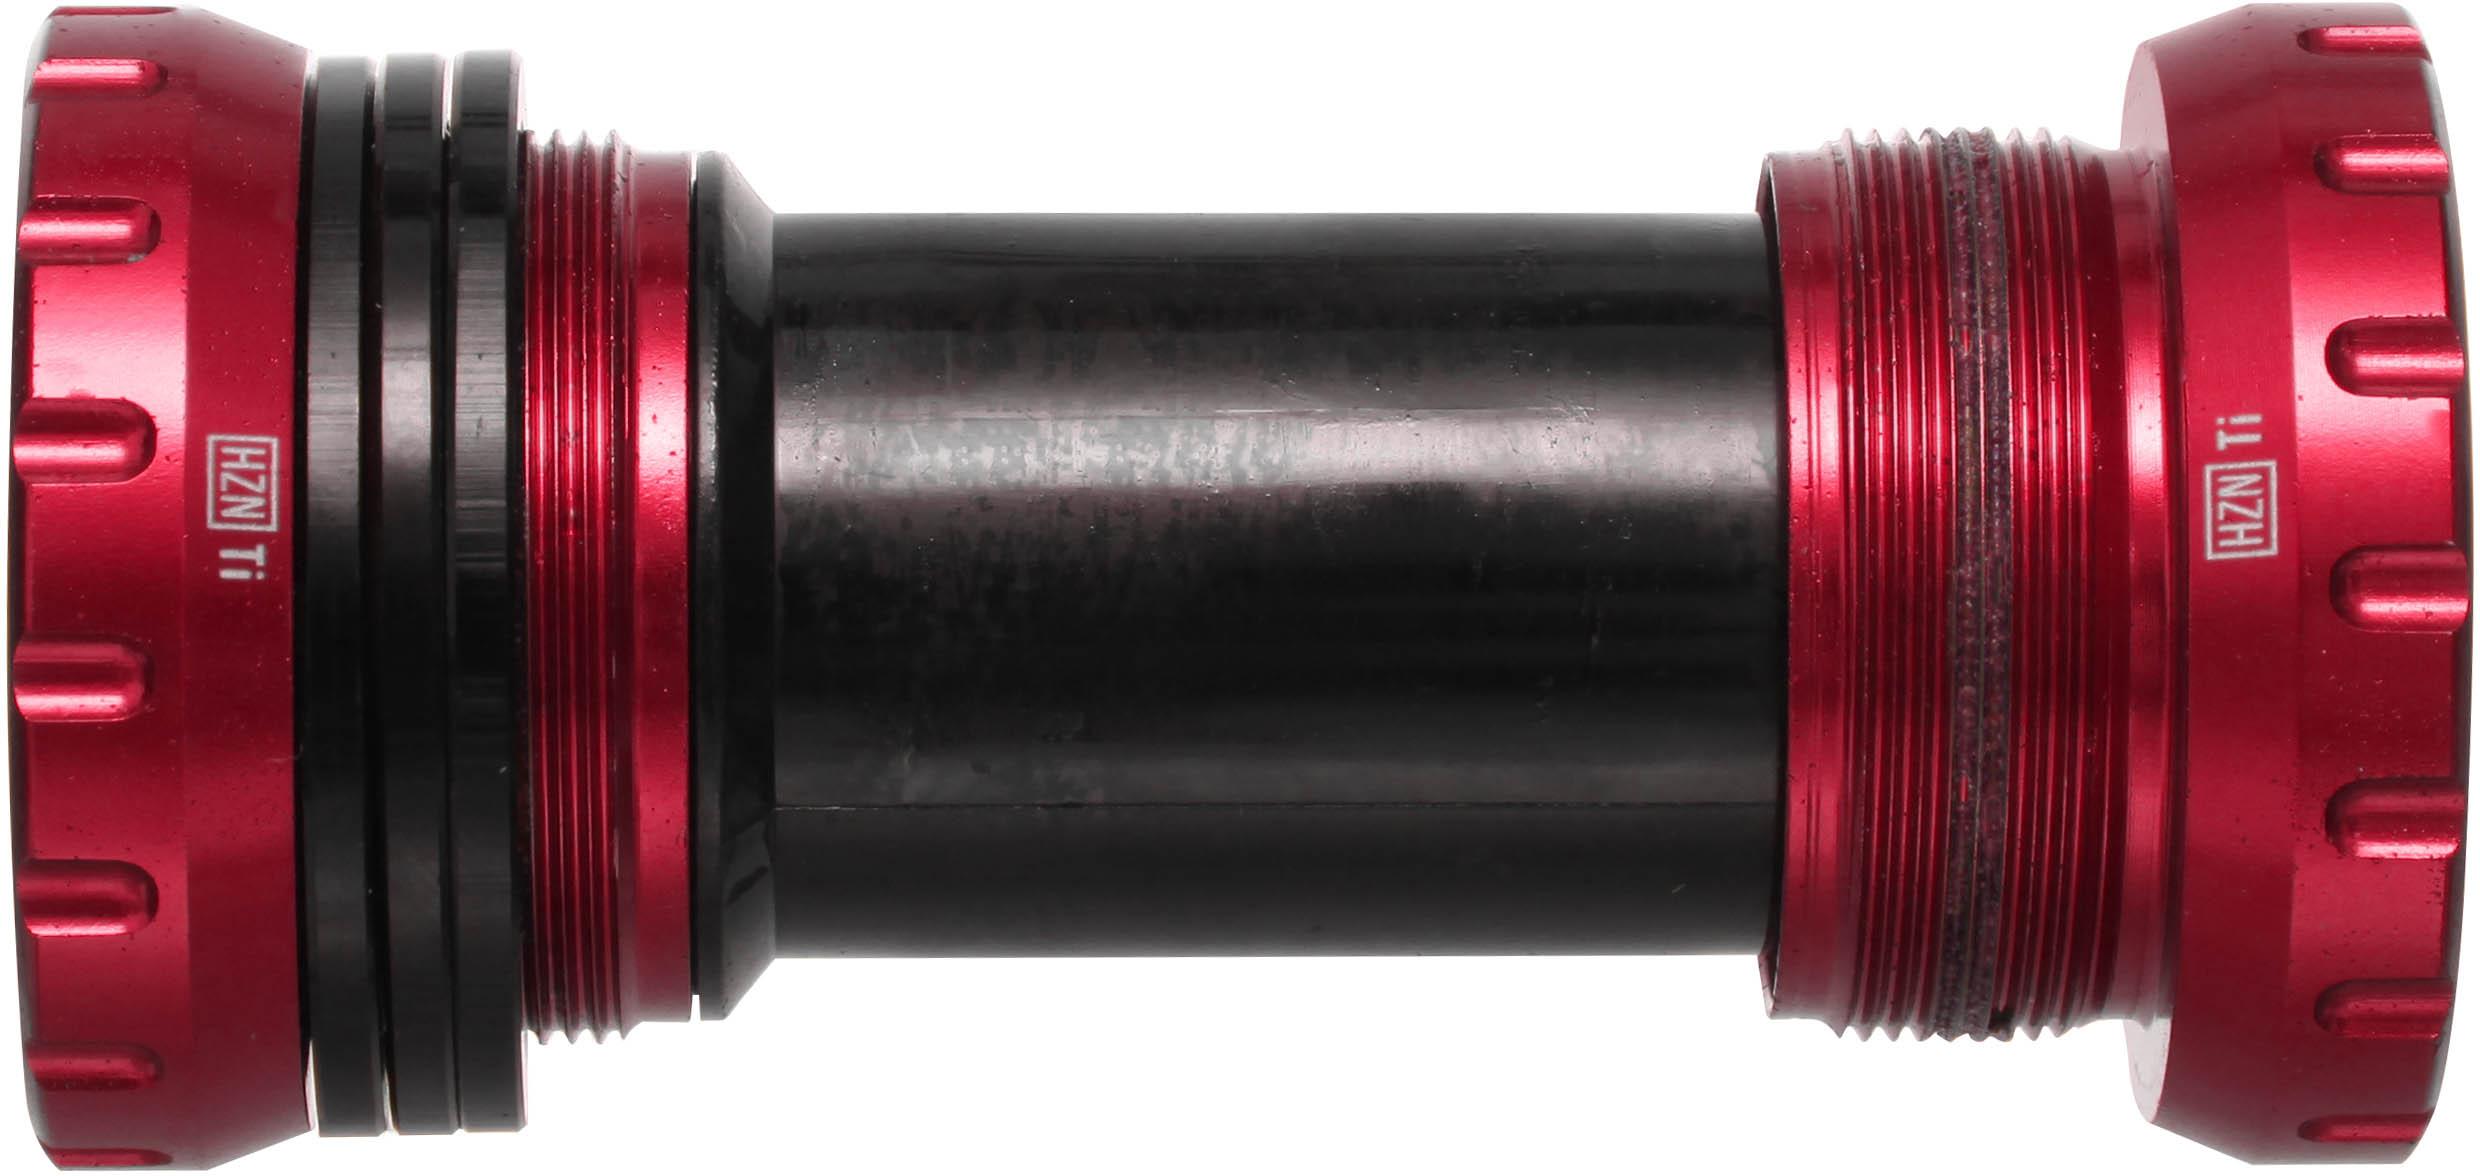 Nukeproof Horizon Shimano Bottom Bracket (24mm) - Red